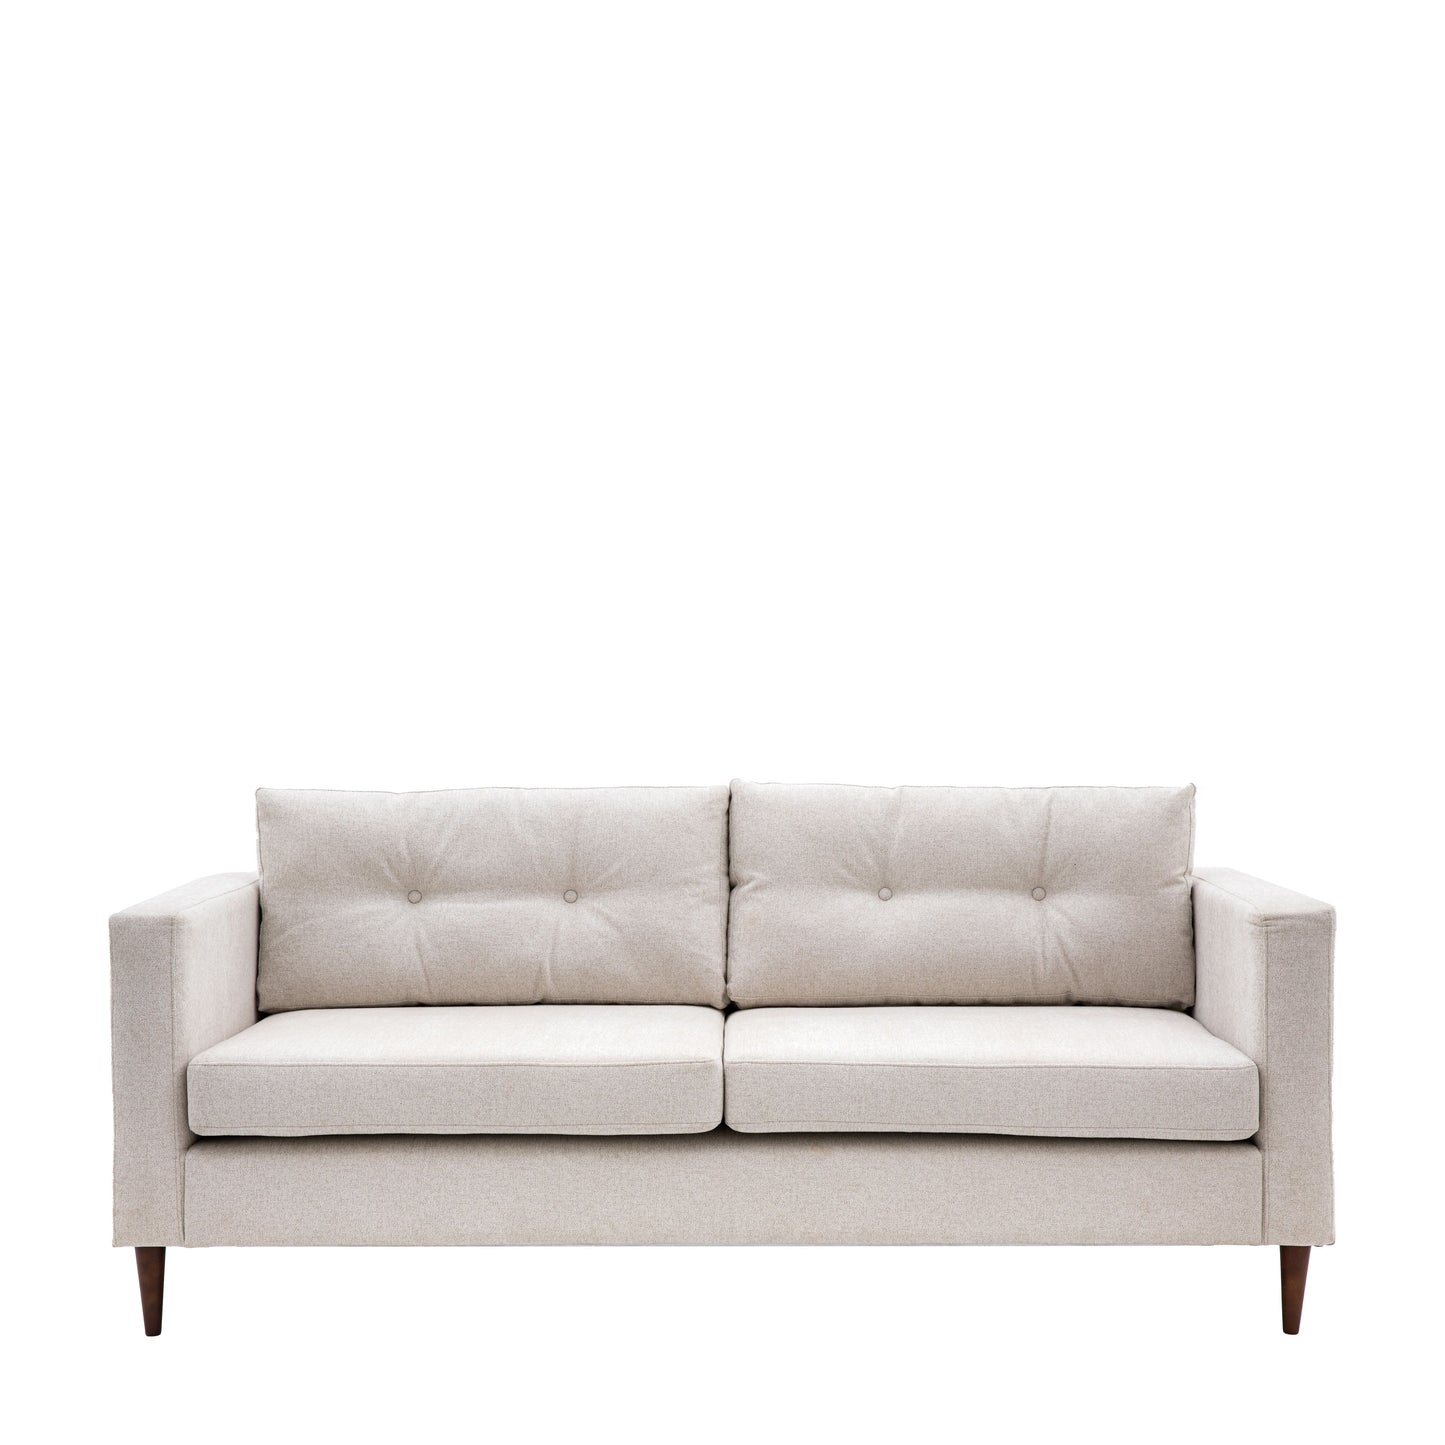 Harlow 3 Seater Sofa in Light Grey